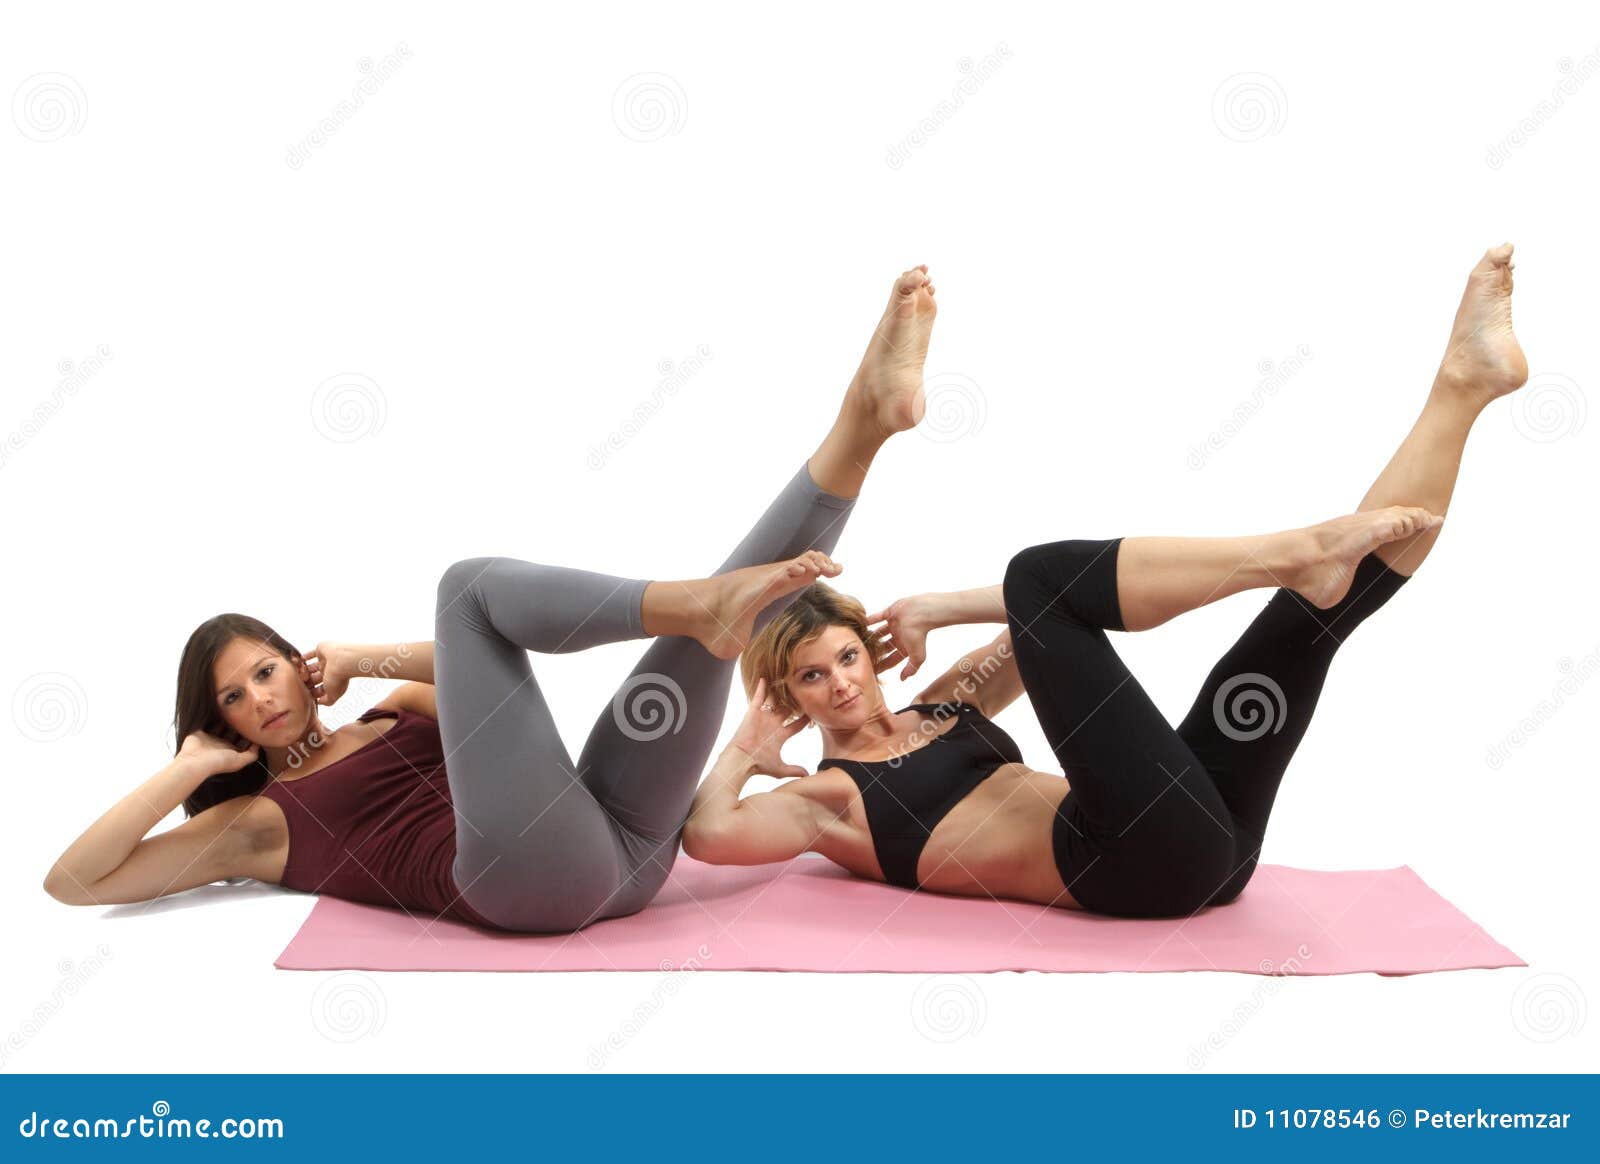 girls practicing pilates